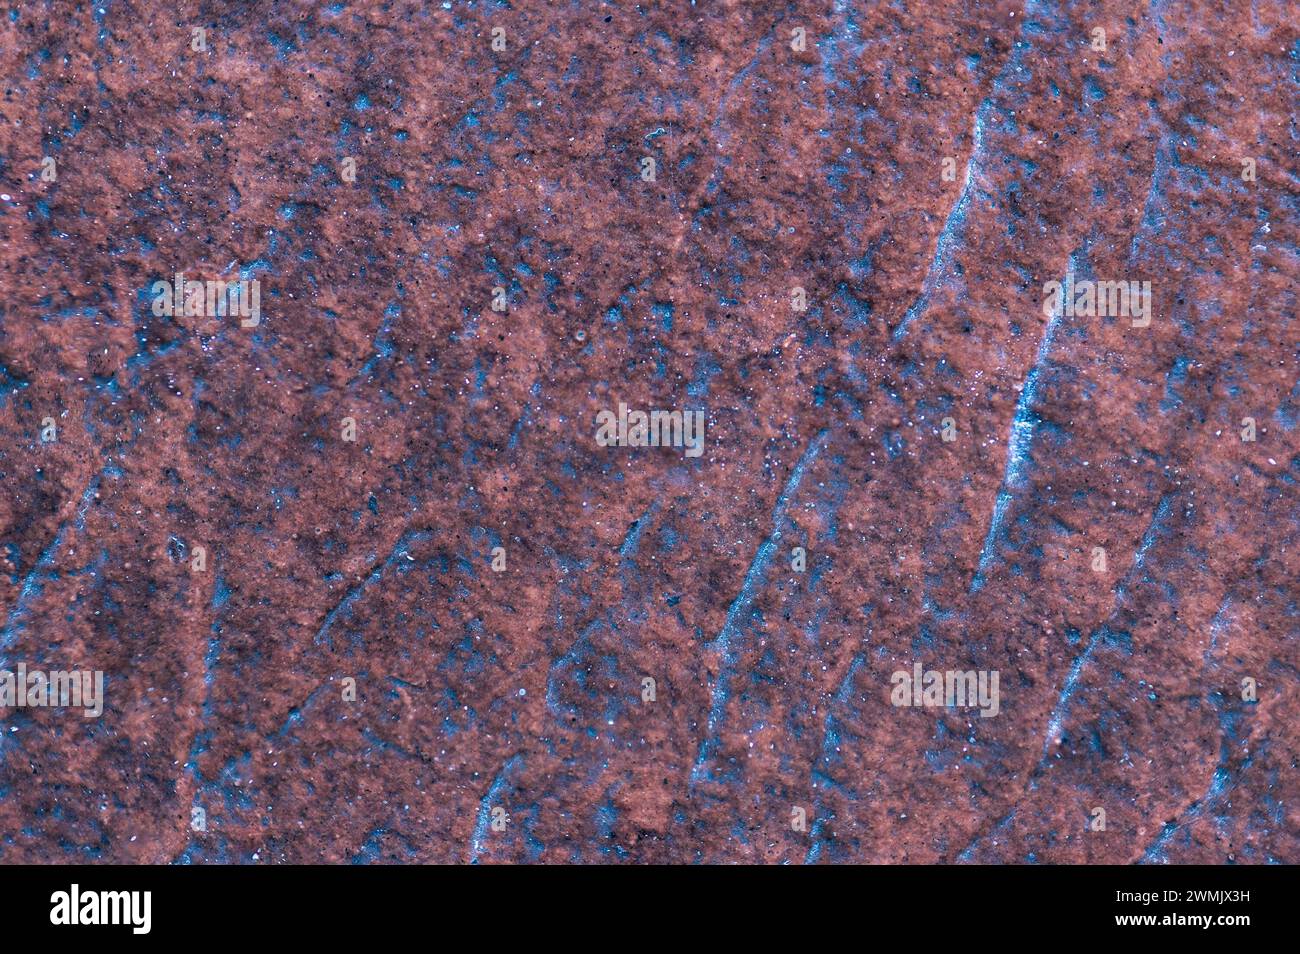 super macro image of reddish leather surface, 4x magnification Stock Photo